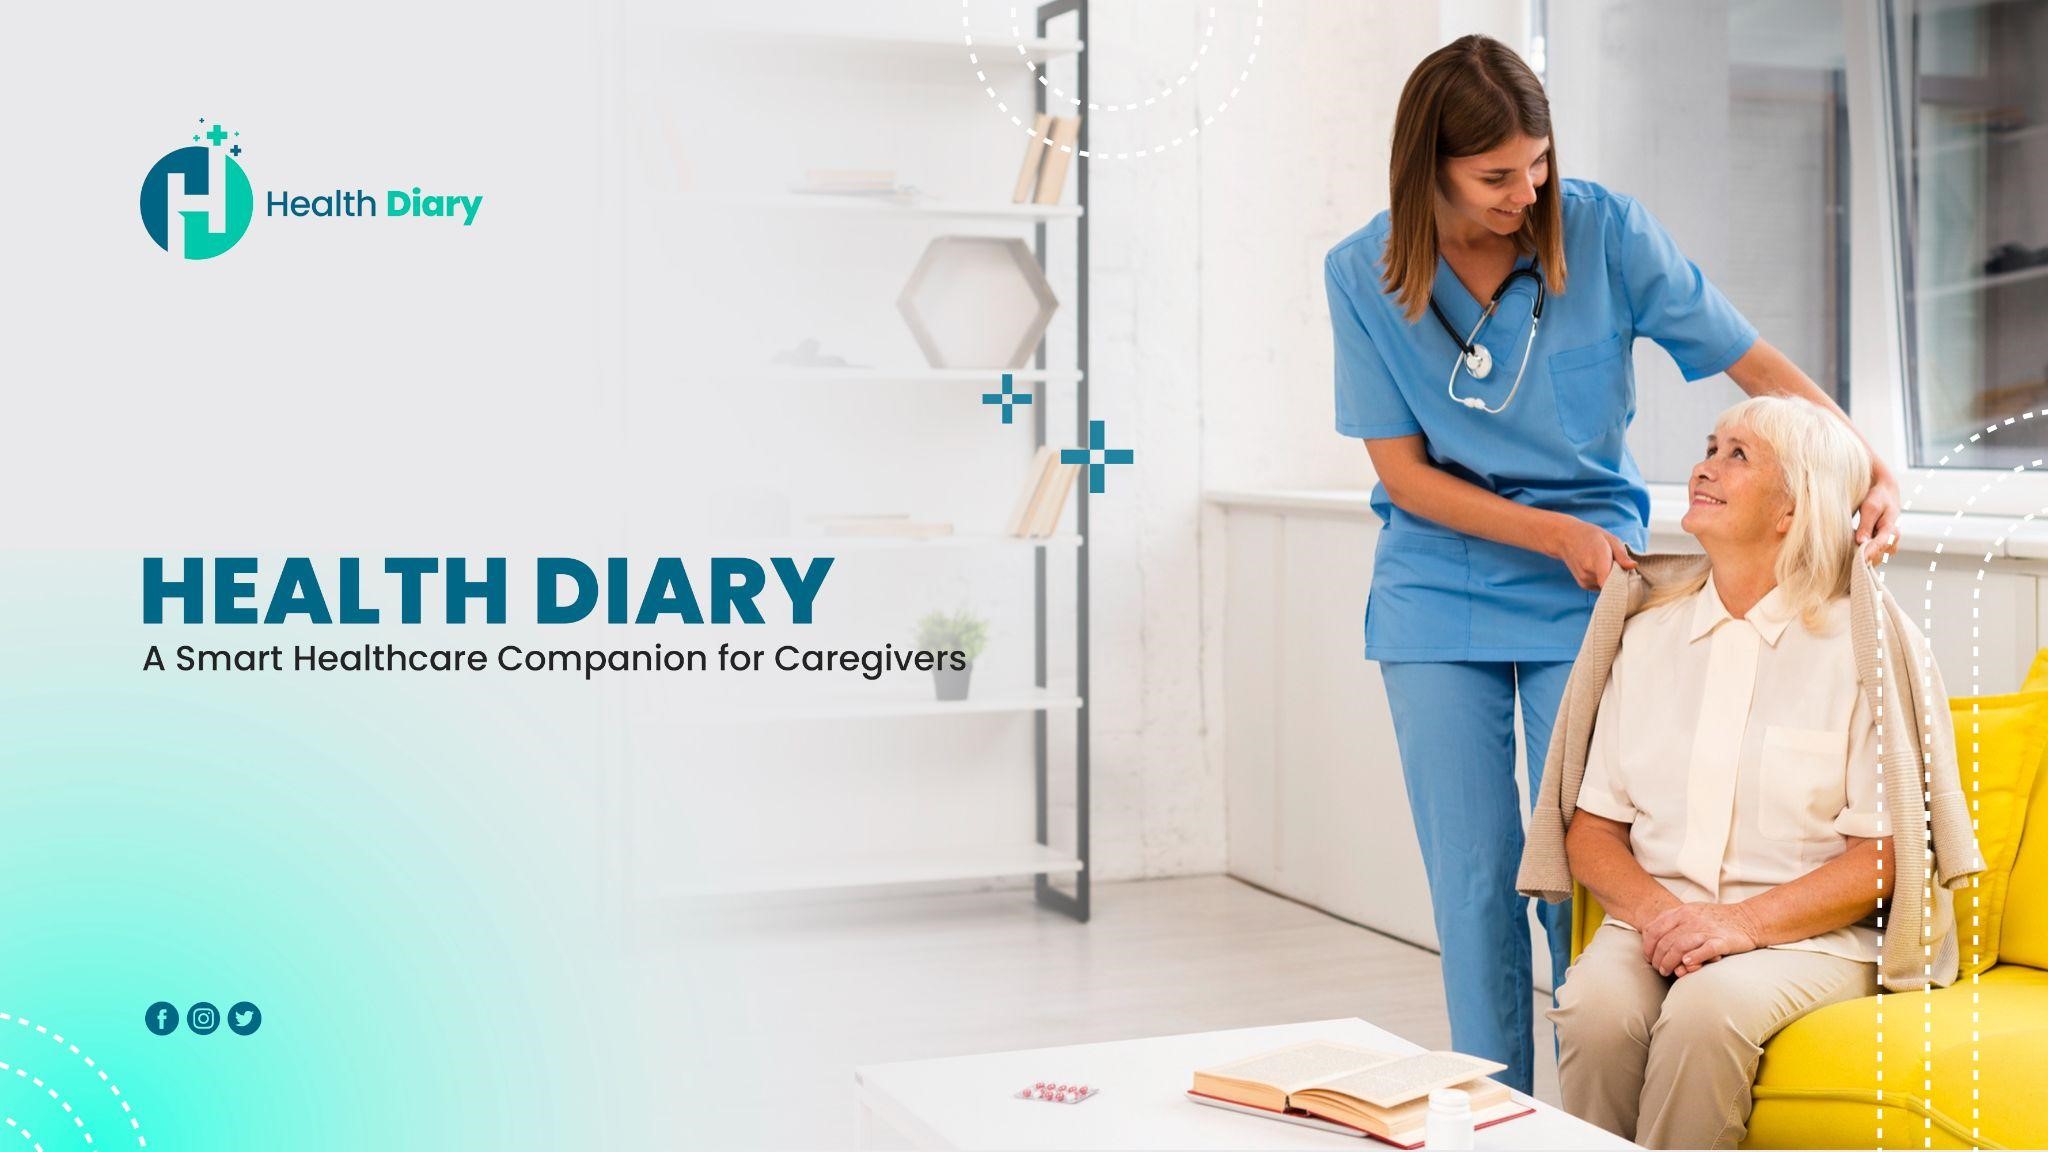 Meet Health Diary: A Smart Healthcare Companion for Caregivers